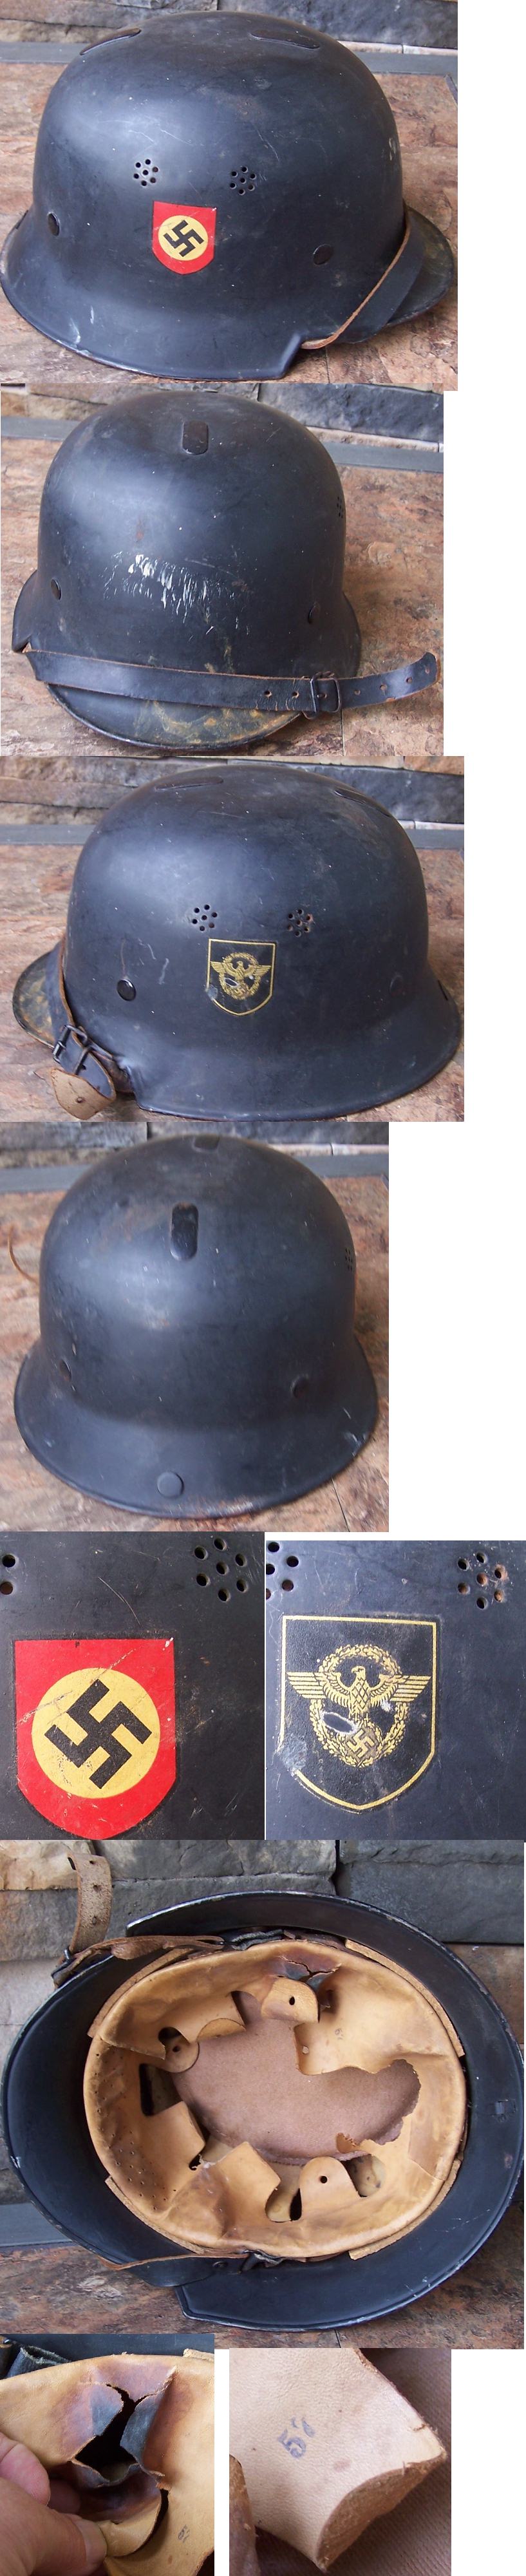 M34 Fire Police Helmet